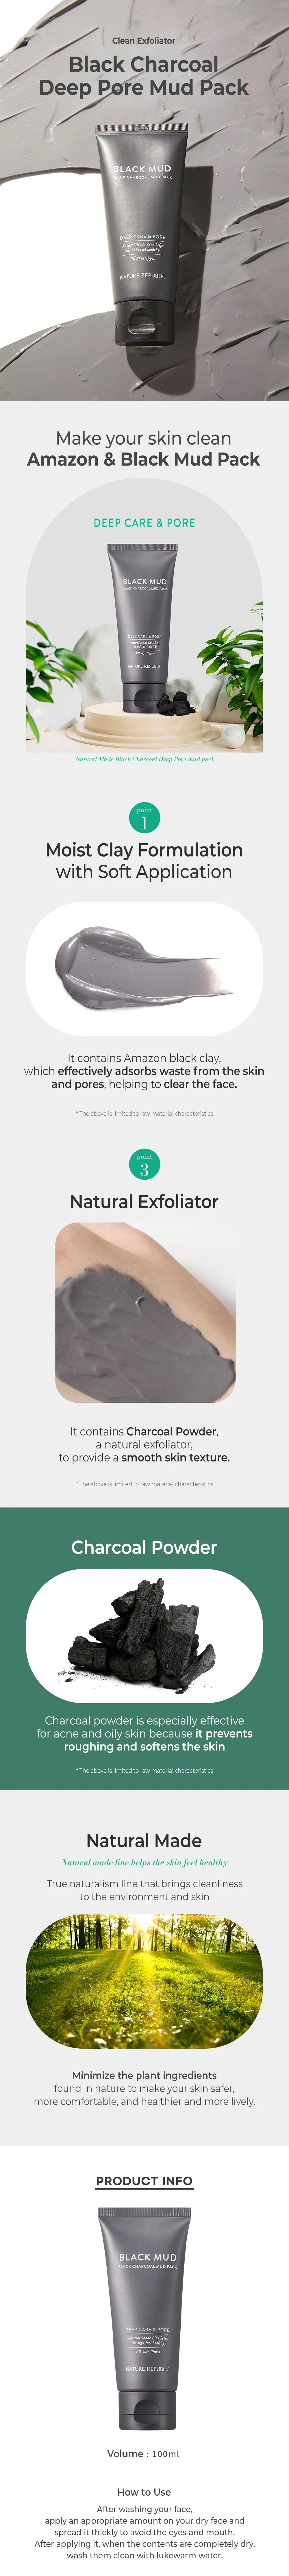 Nature Republic_Natural Made Black Charcoal Deep Pore Mud Pack 100ml_1